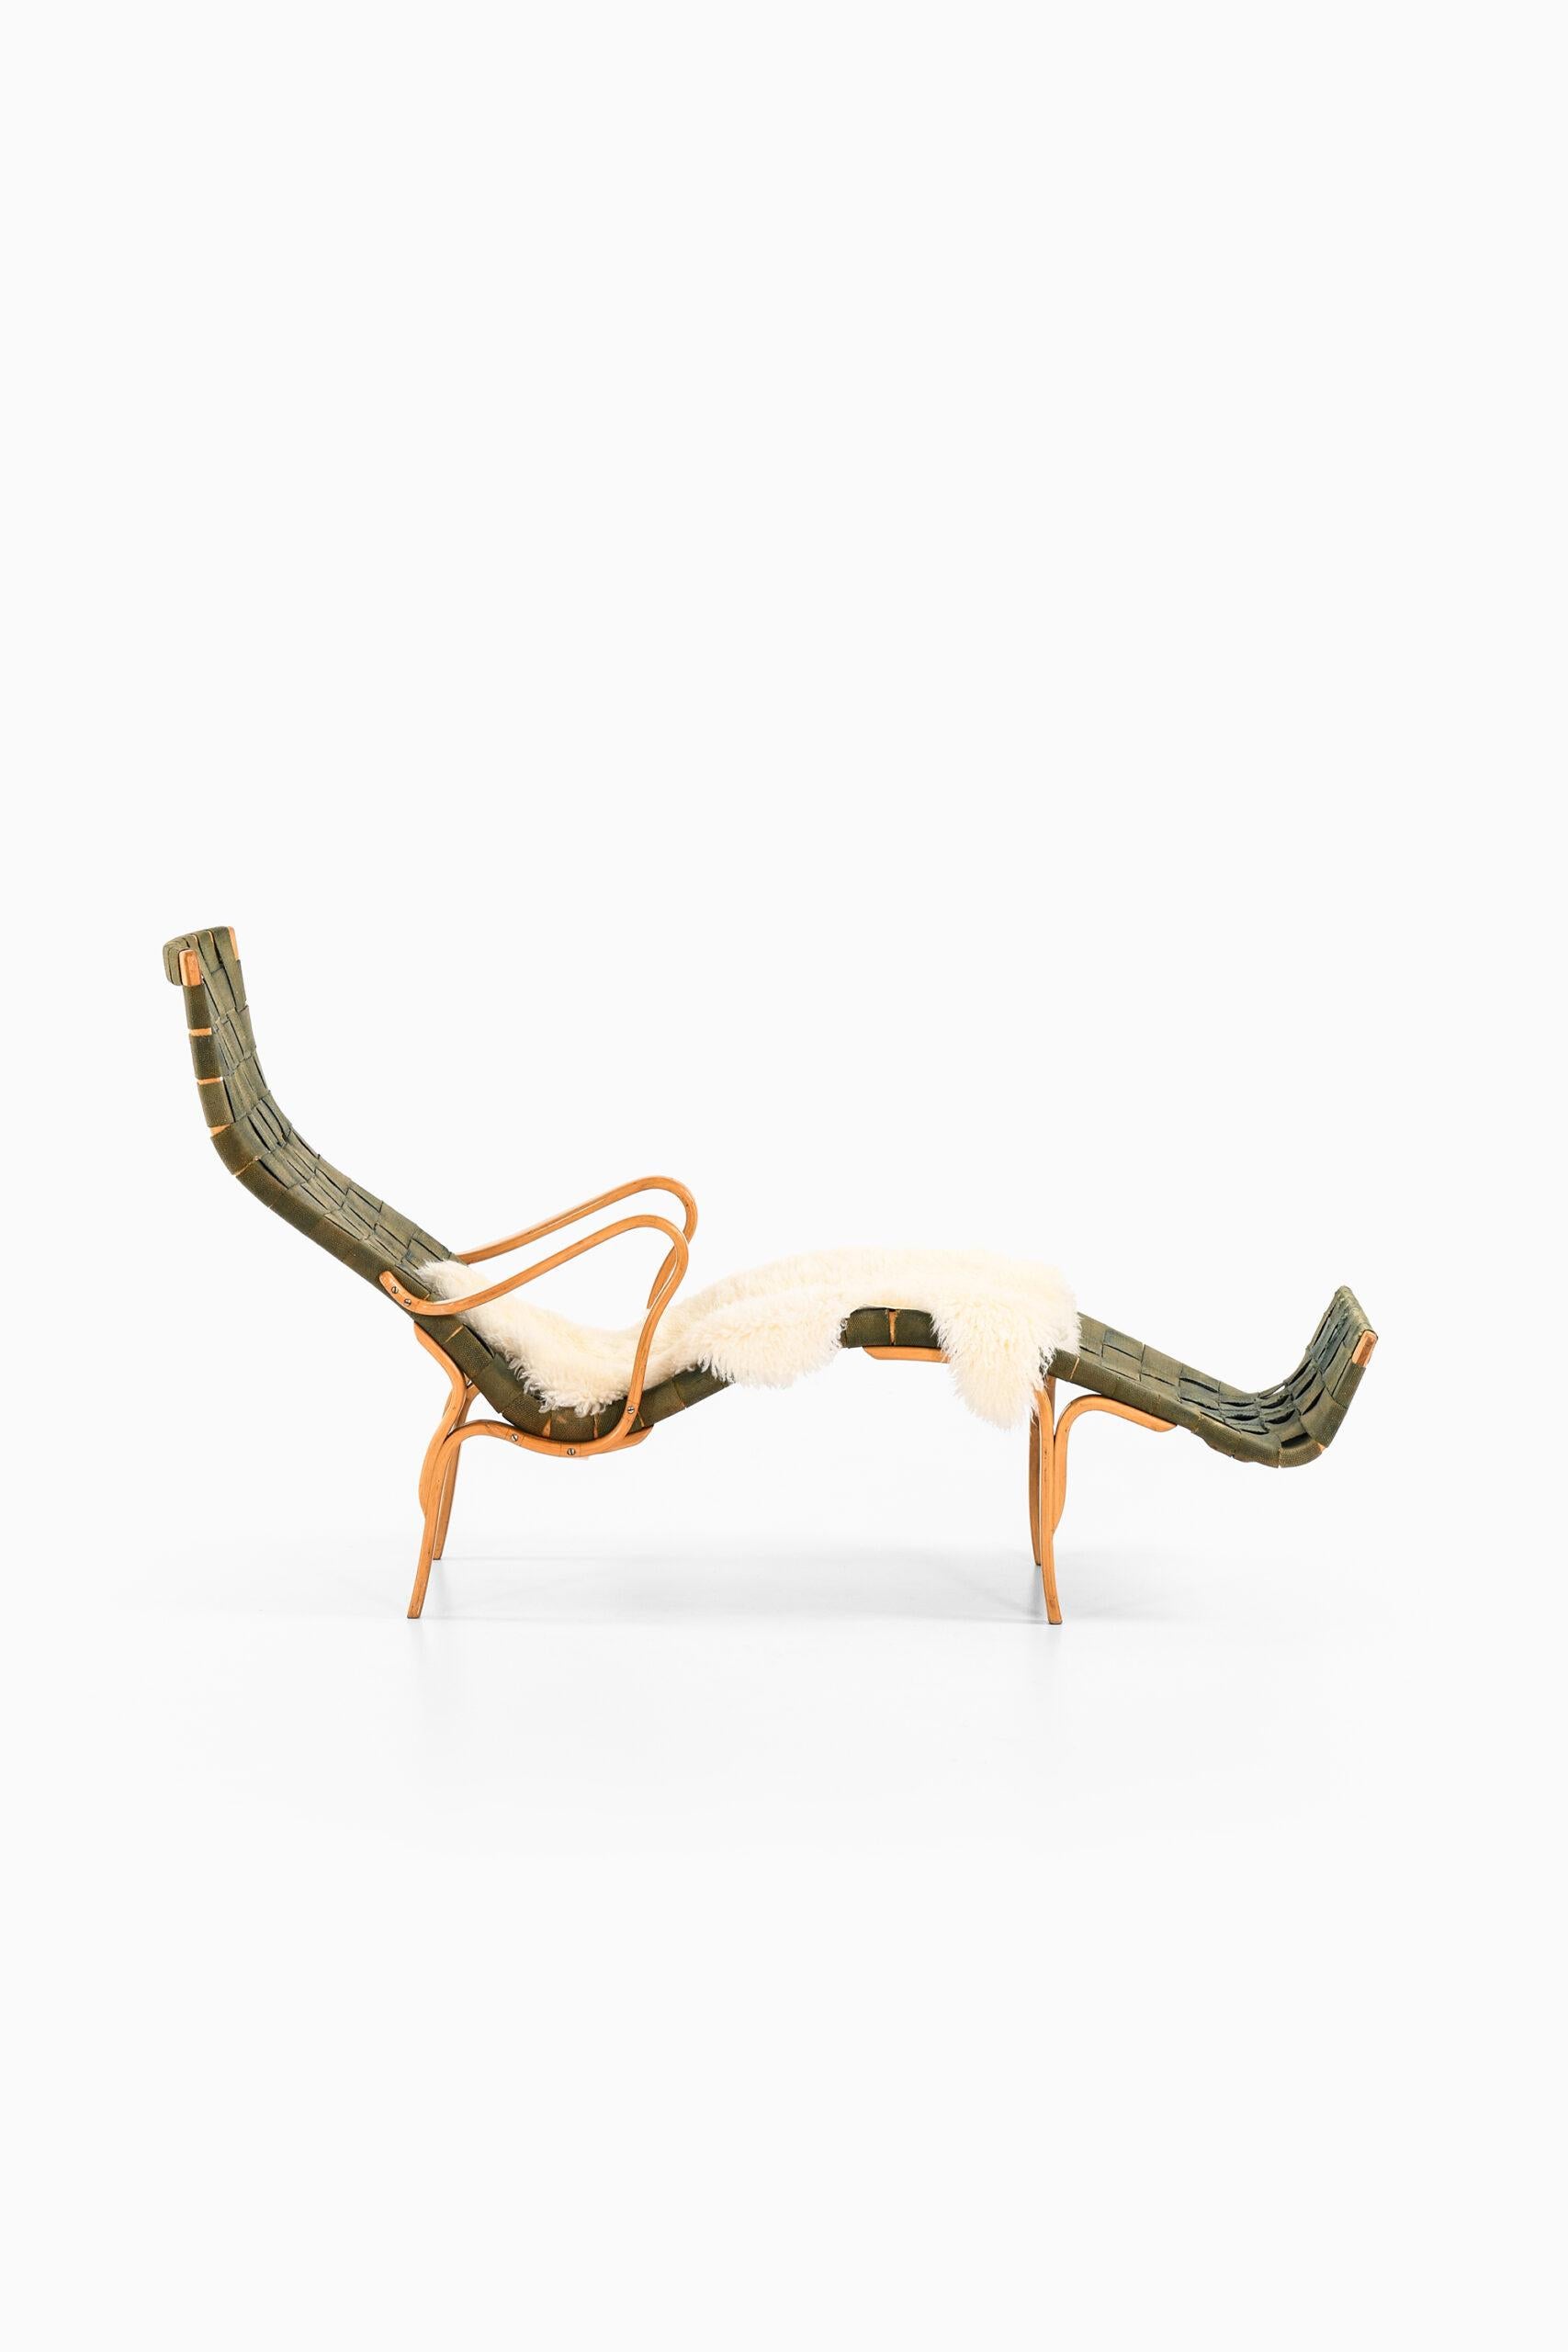 Lounge chair model Pernilla 3 / T-108 designed by Bruno Mathsson. Produced by Karl Mathsson in Värnamo, Sweden.